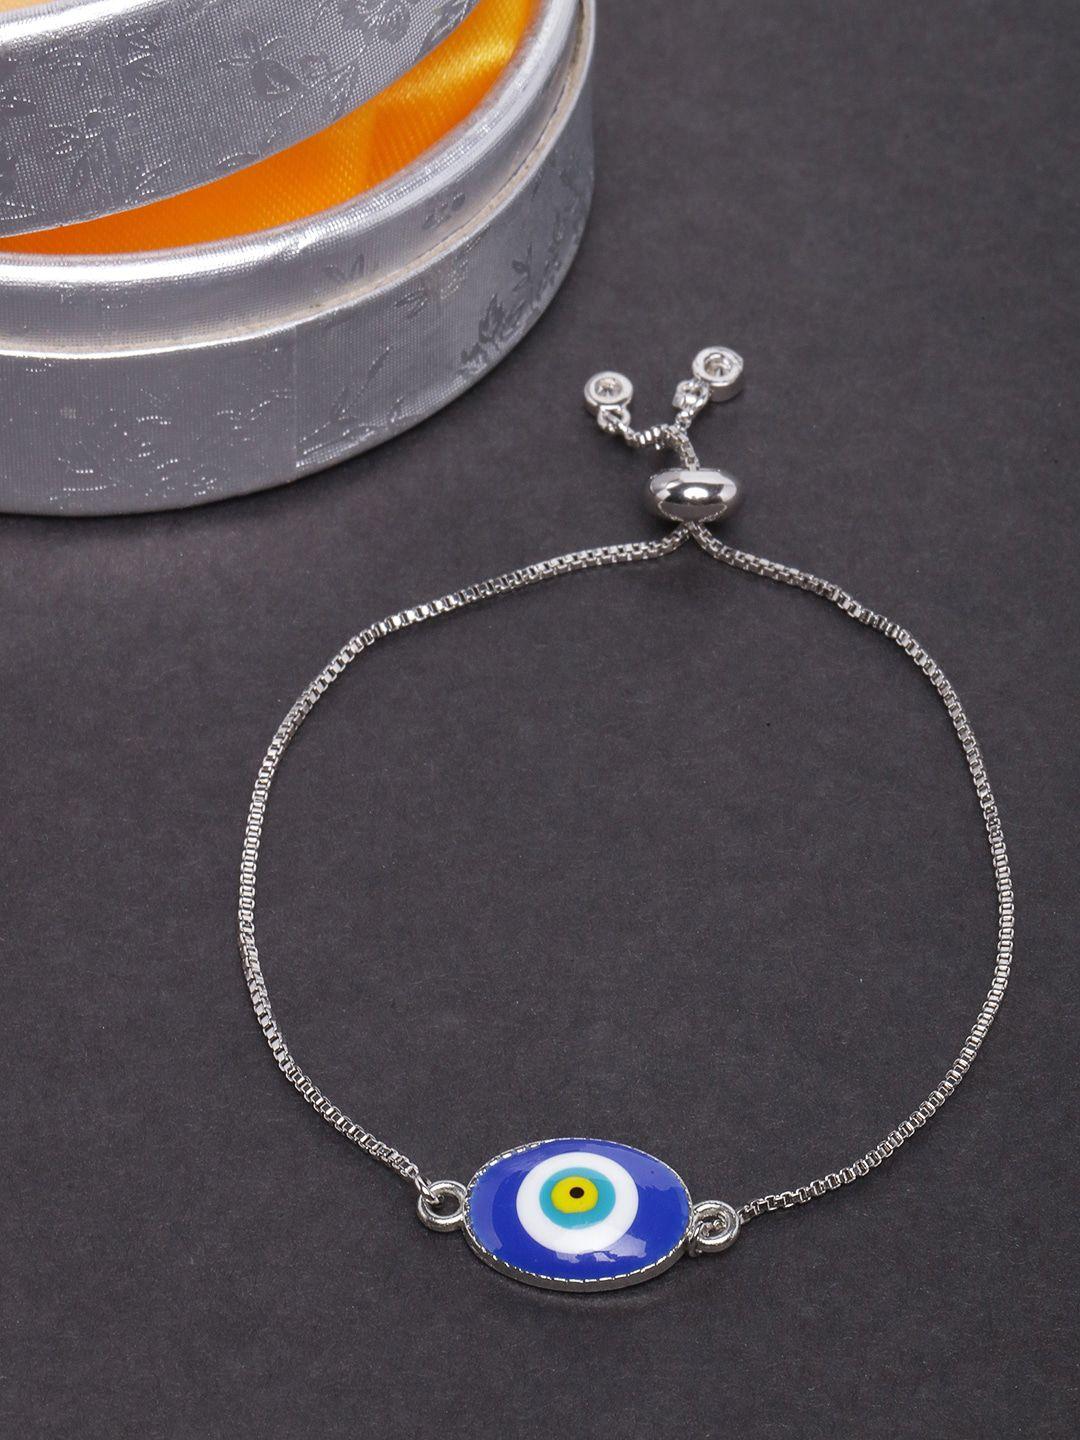 dressberry silver-plated evil eye oval shaped enamelled charm bracelet